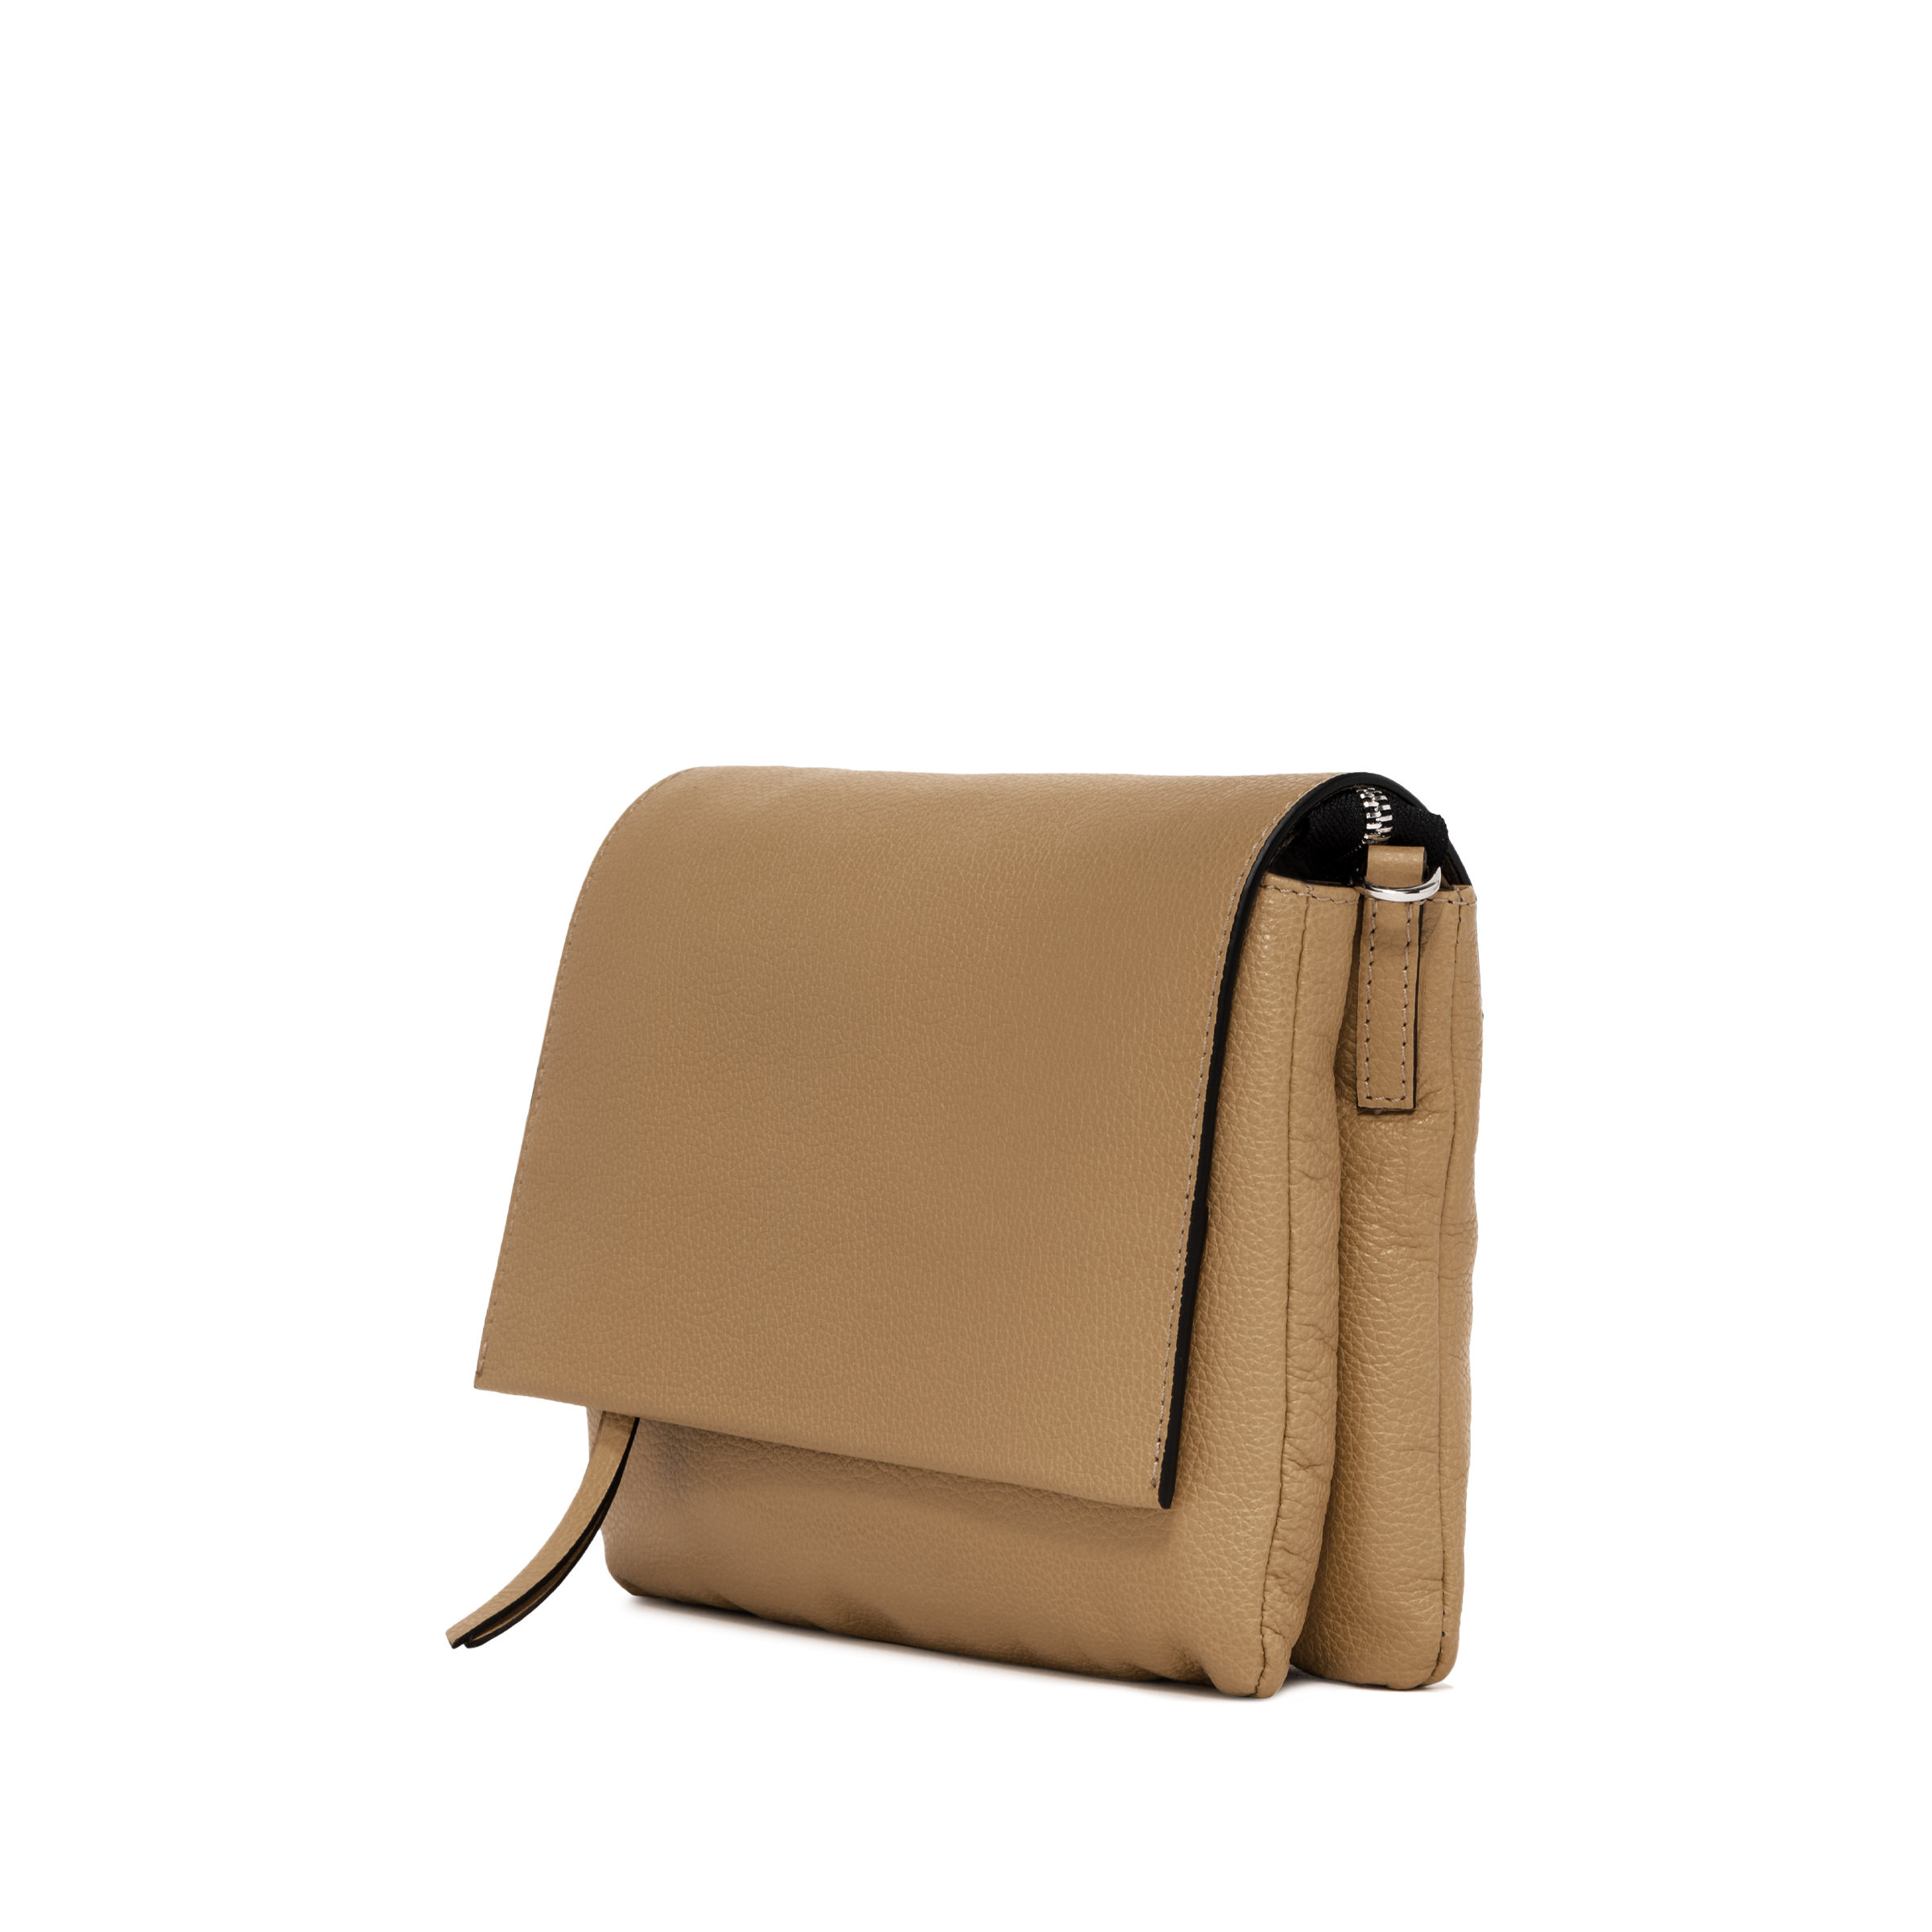 Gianni Chiarini - Three leather bag, Natural, large image number 2